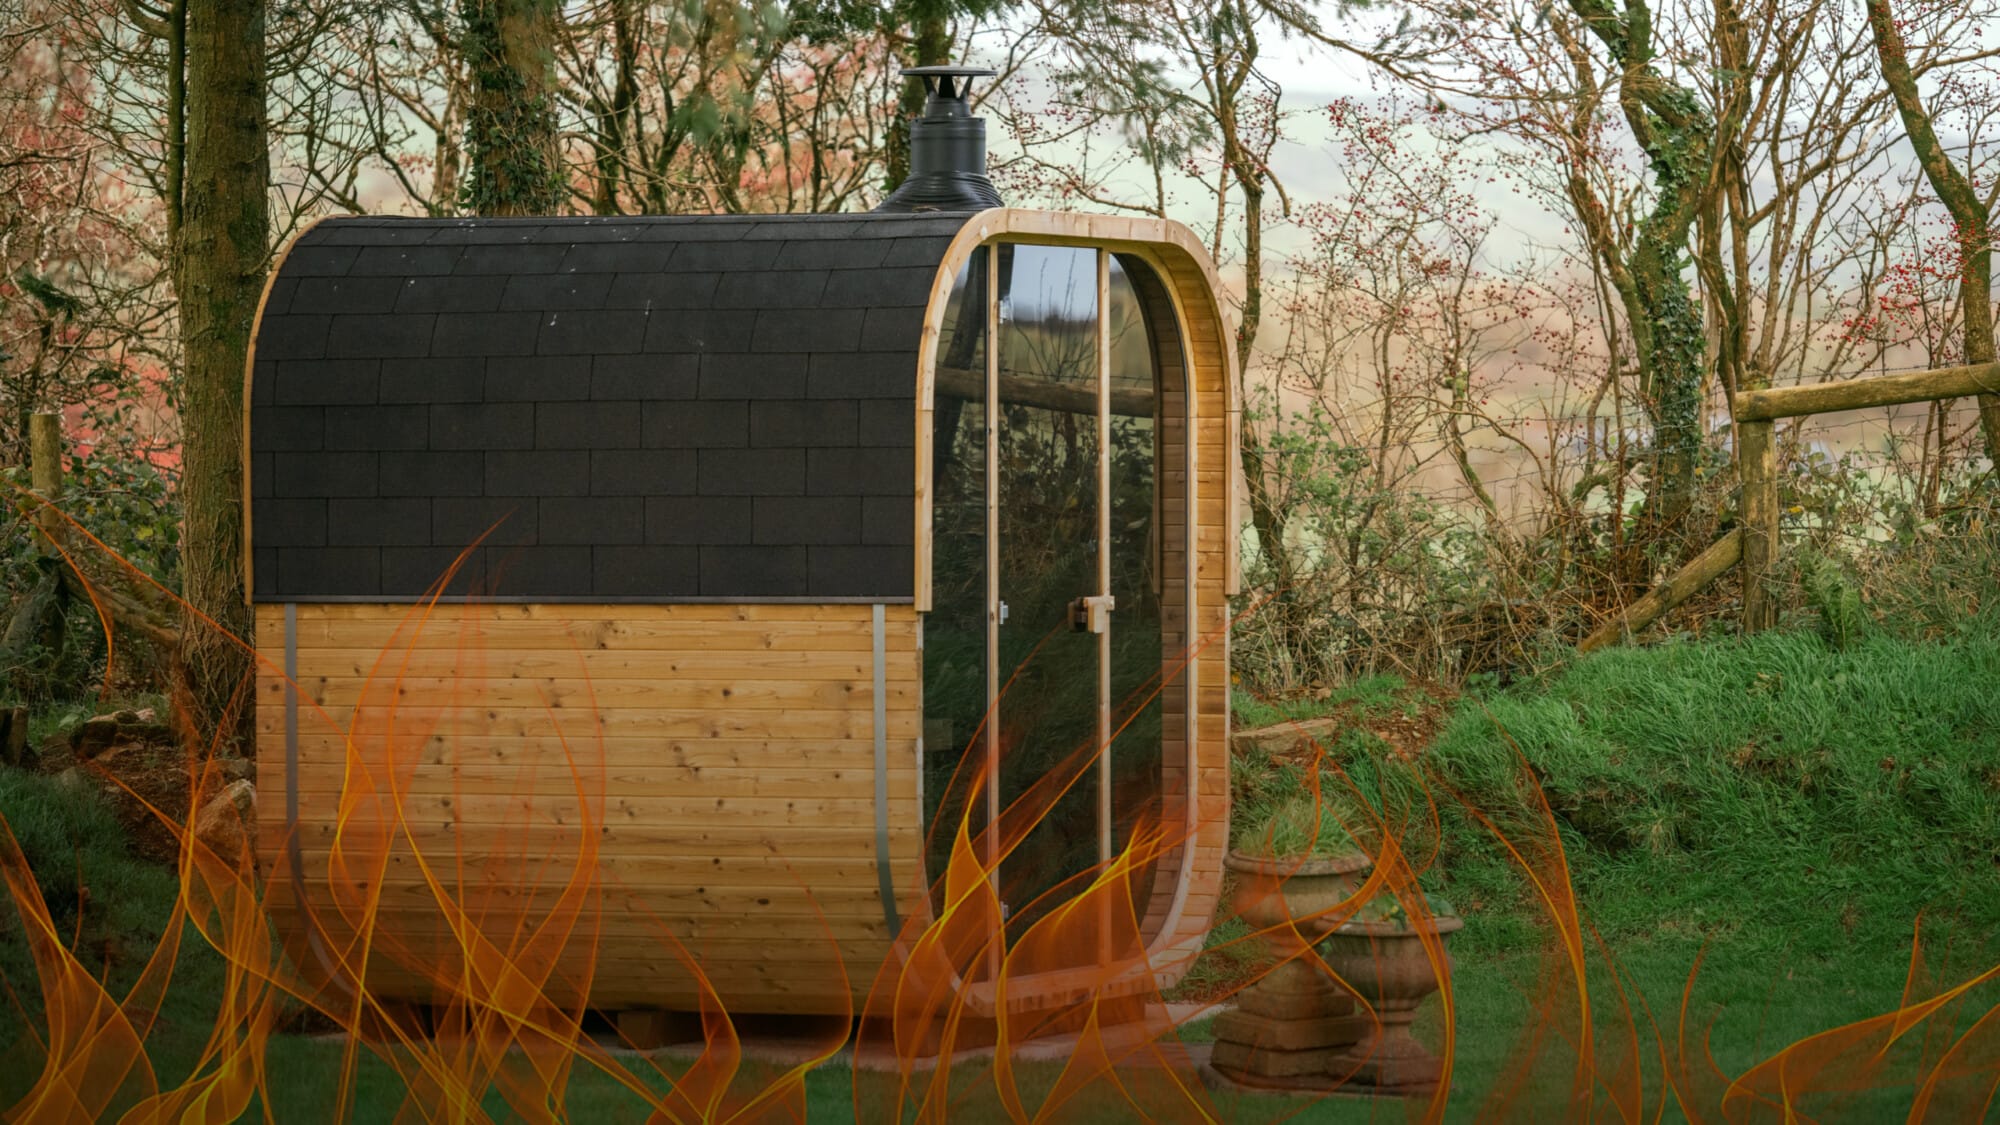 Wood-fired heating sauna option video